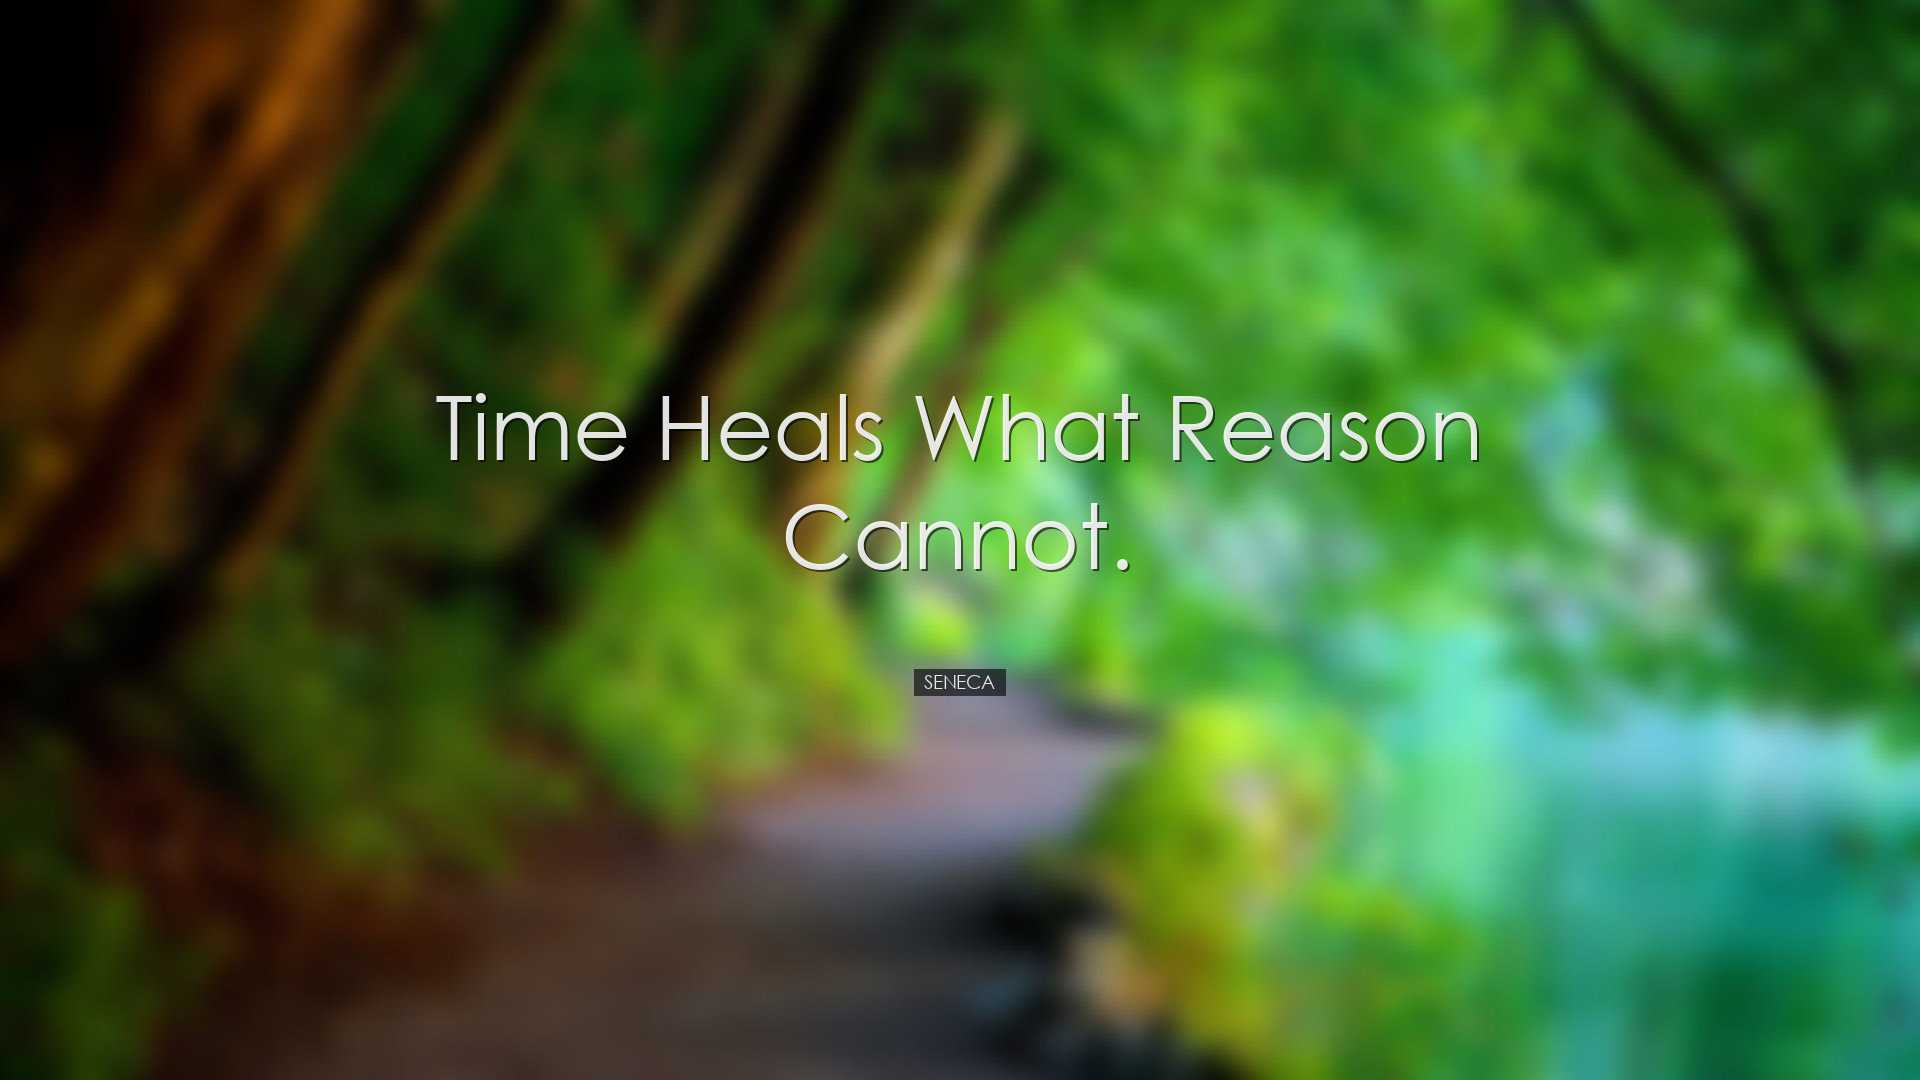 Time heals what reason cannot. - Seneca